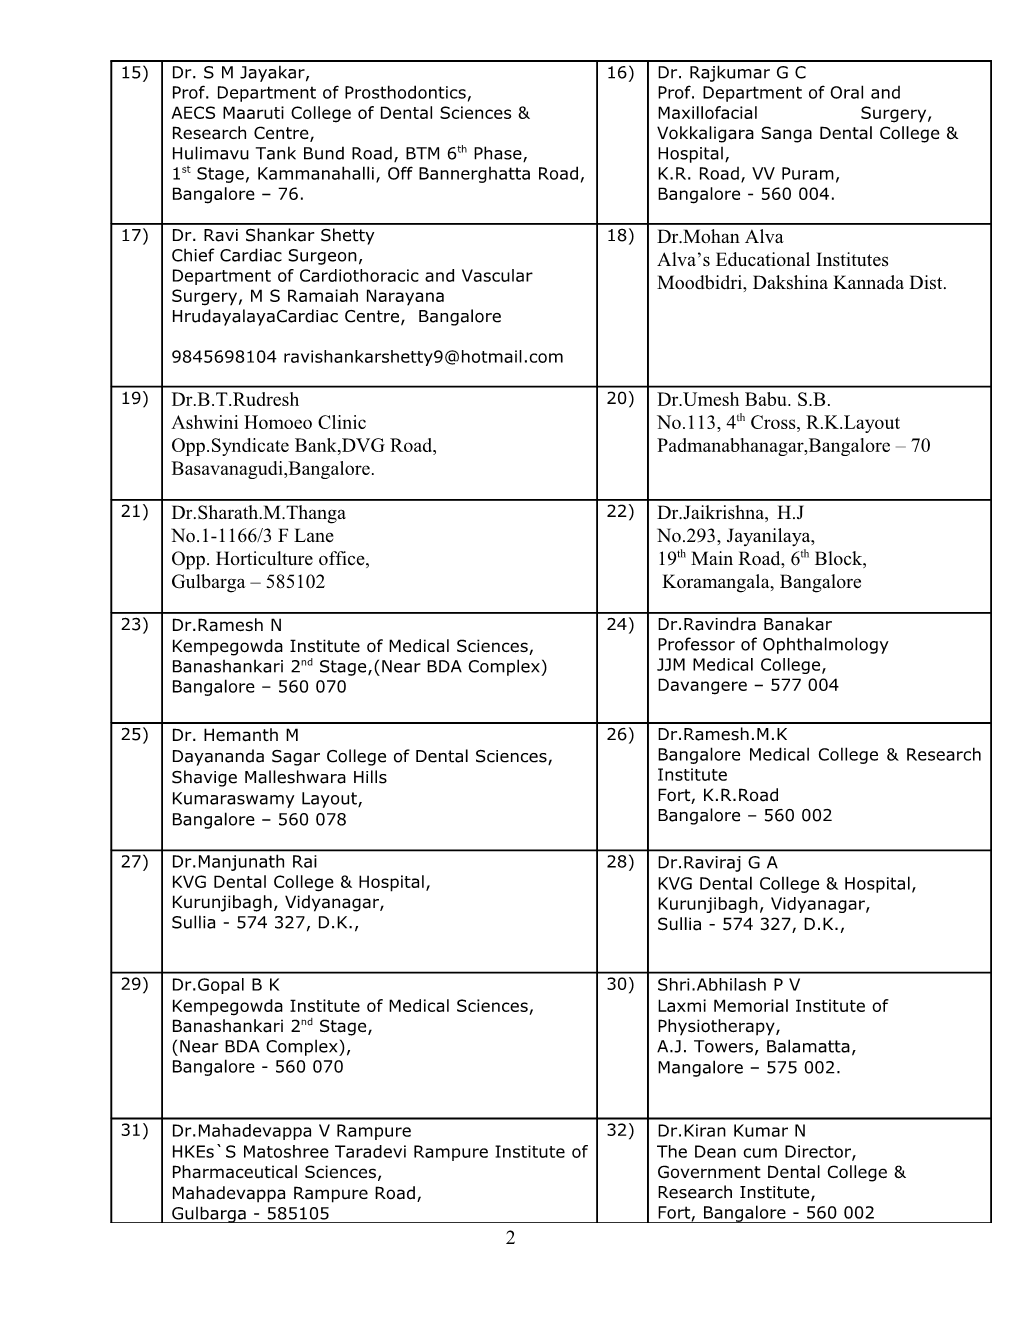 List of Latest Senate Members of Rguhs As on June 2009